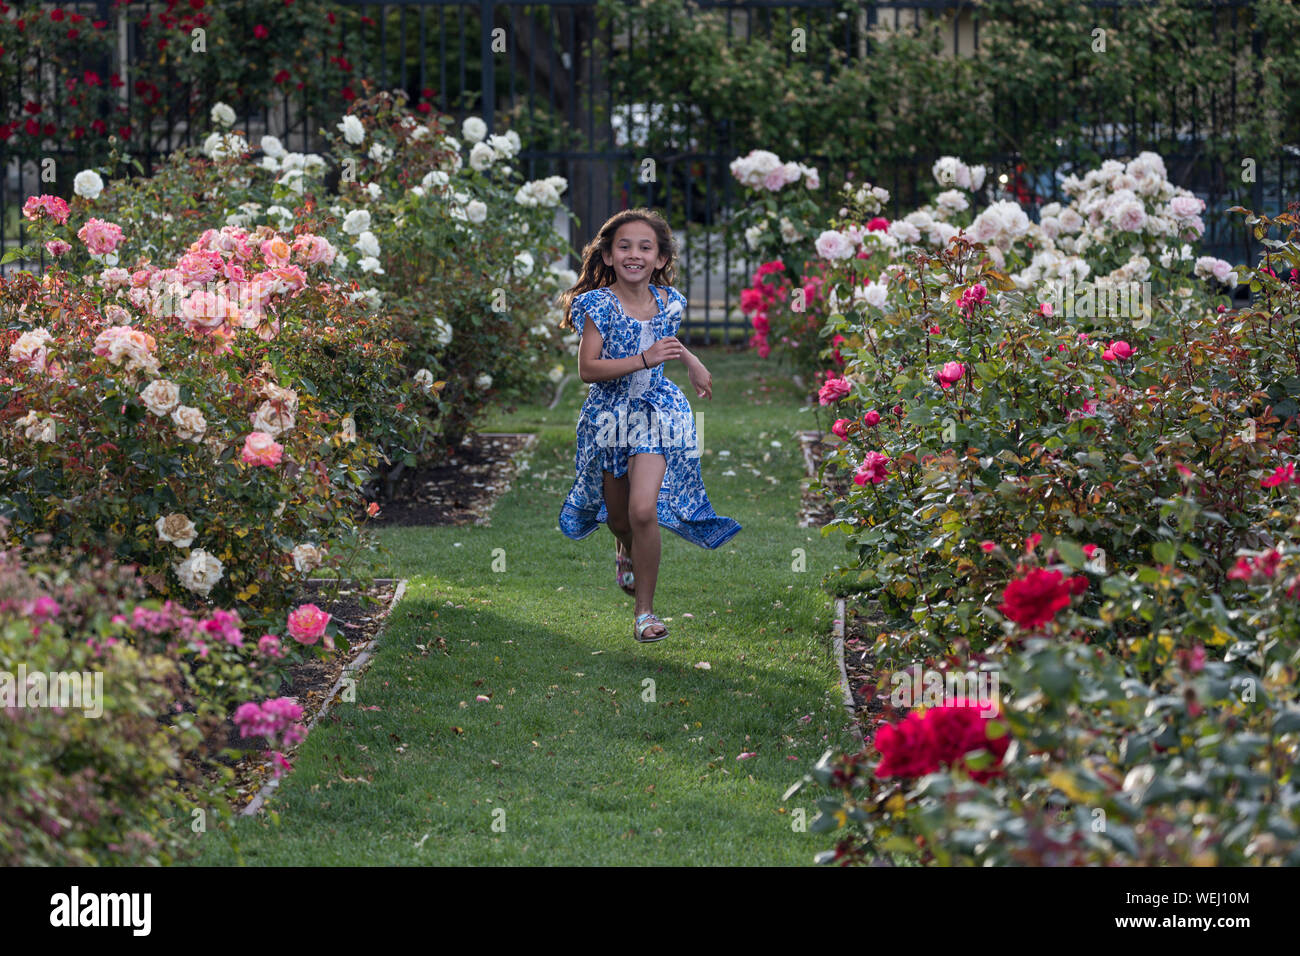 Preteen girl of Asian appearance doing gymnastics in rose garden, San Jose, California Stock Photo